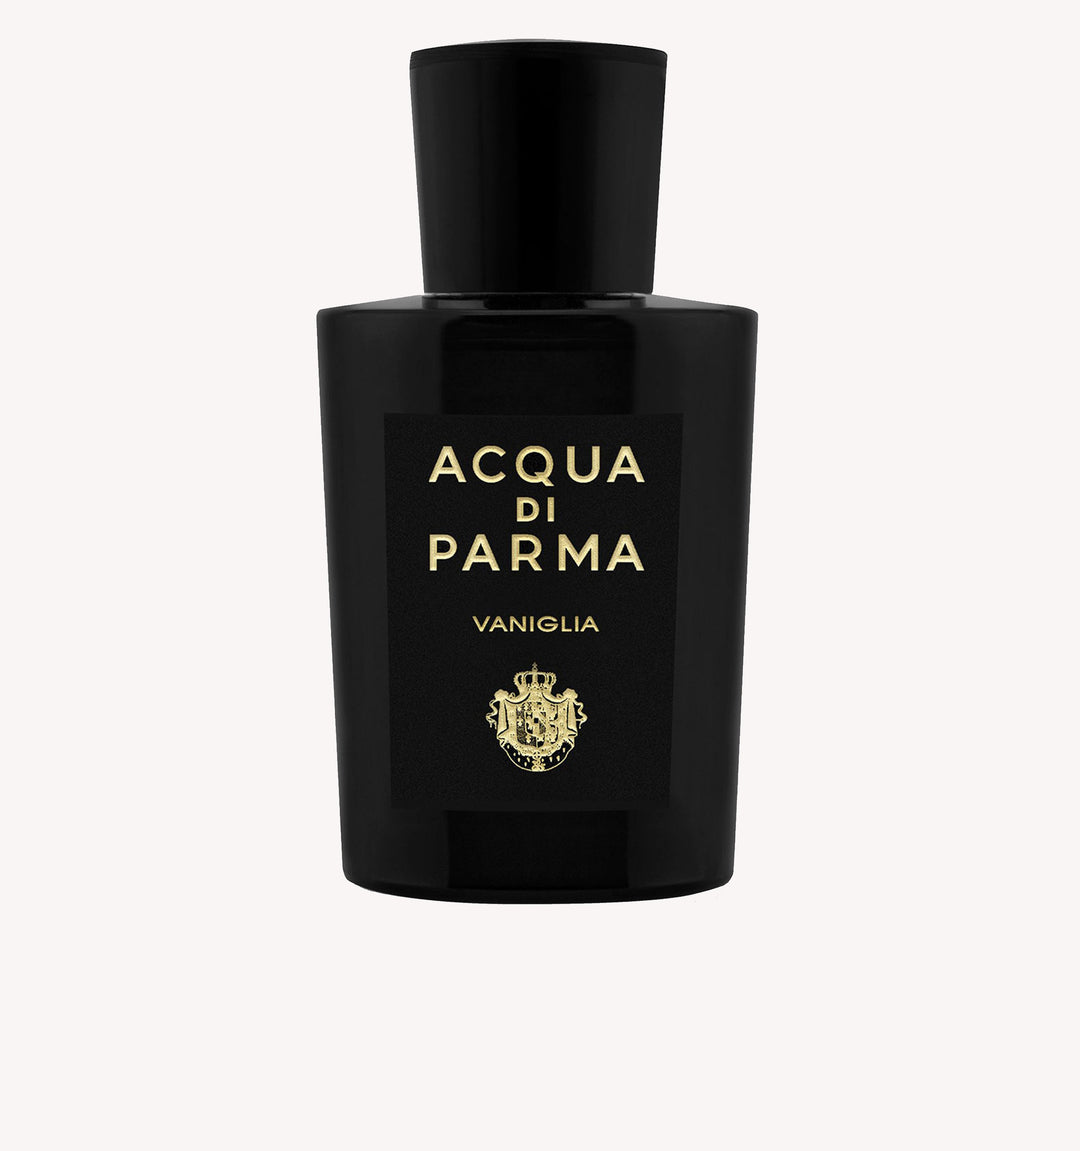 Acqua Di Parma Eau de Parfum Natural Spray in Vaniglia